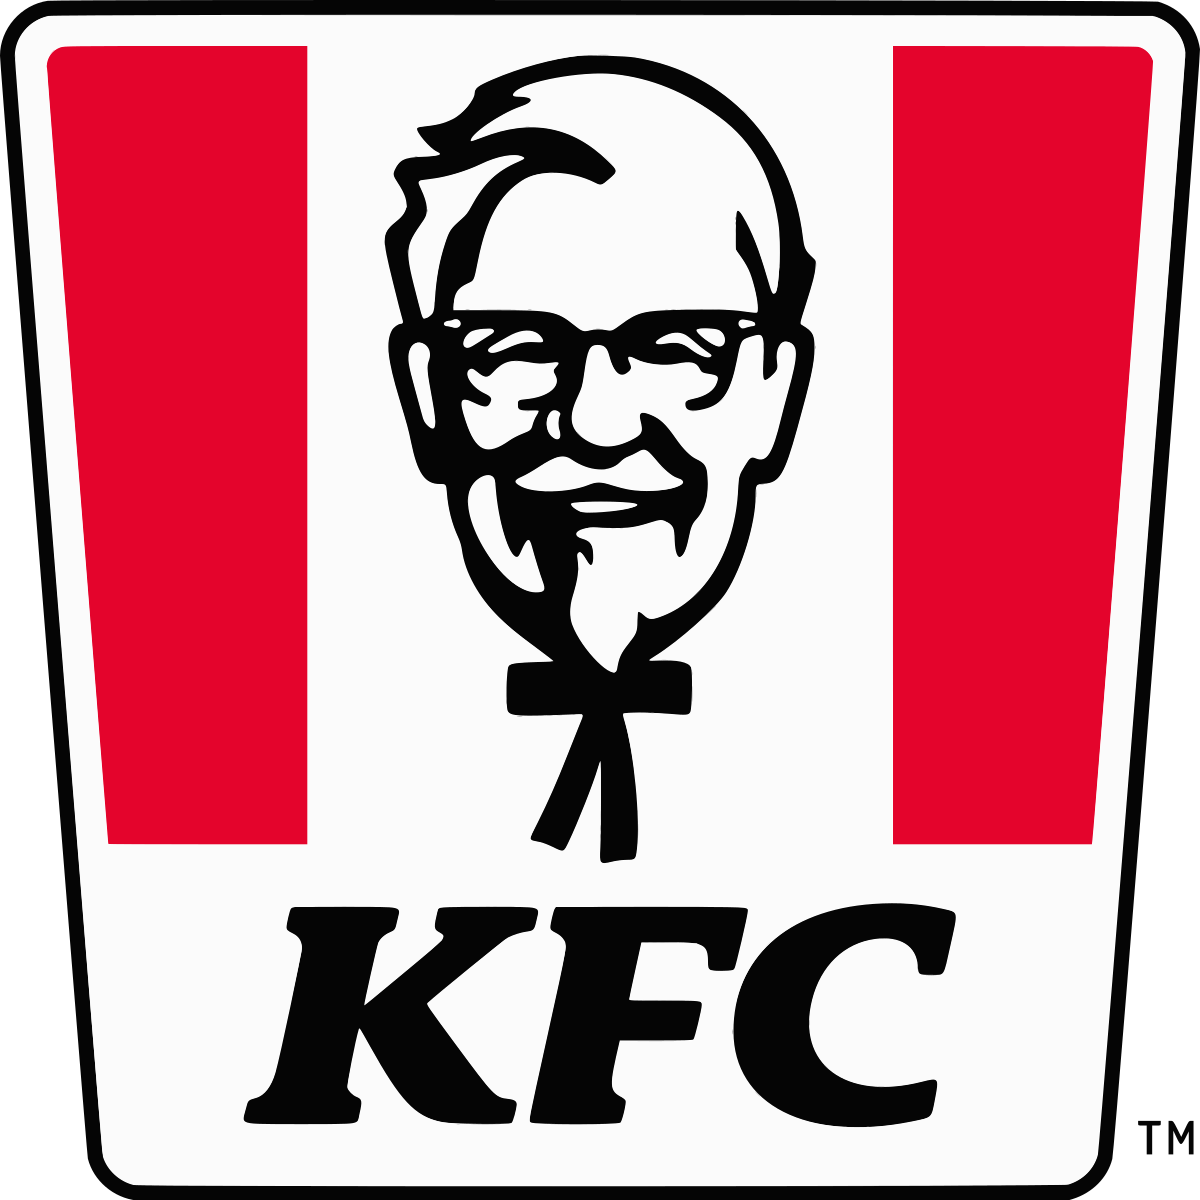 Kfc logo PNG image image